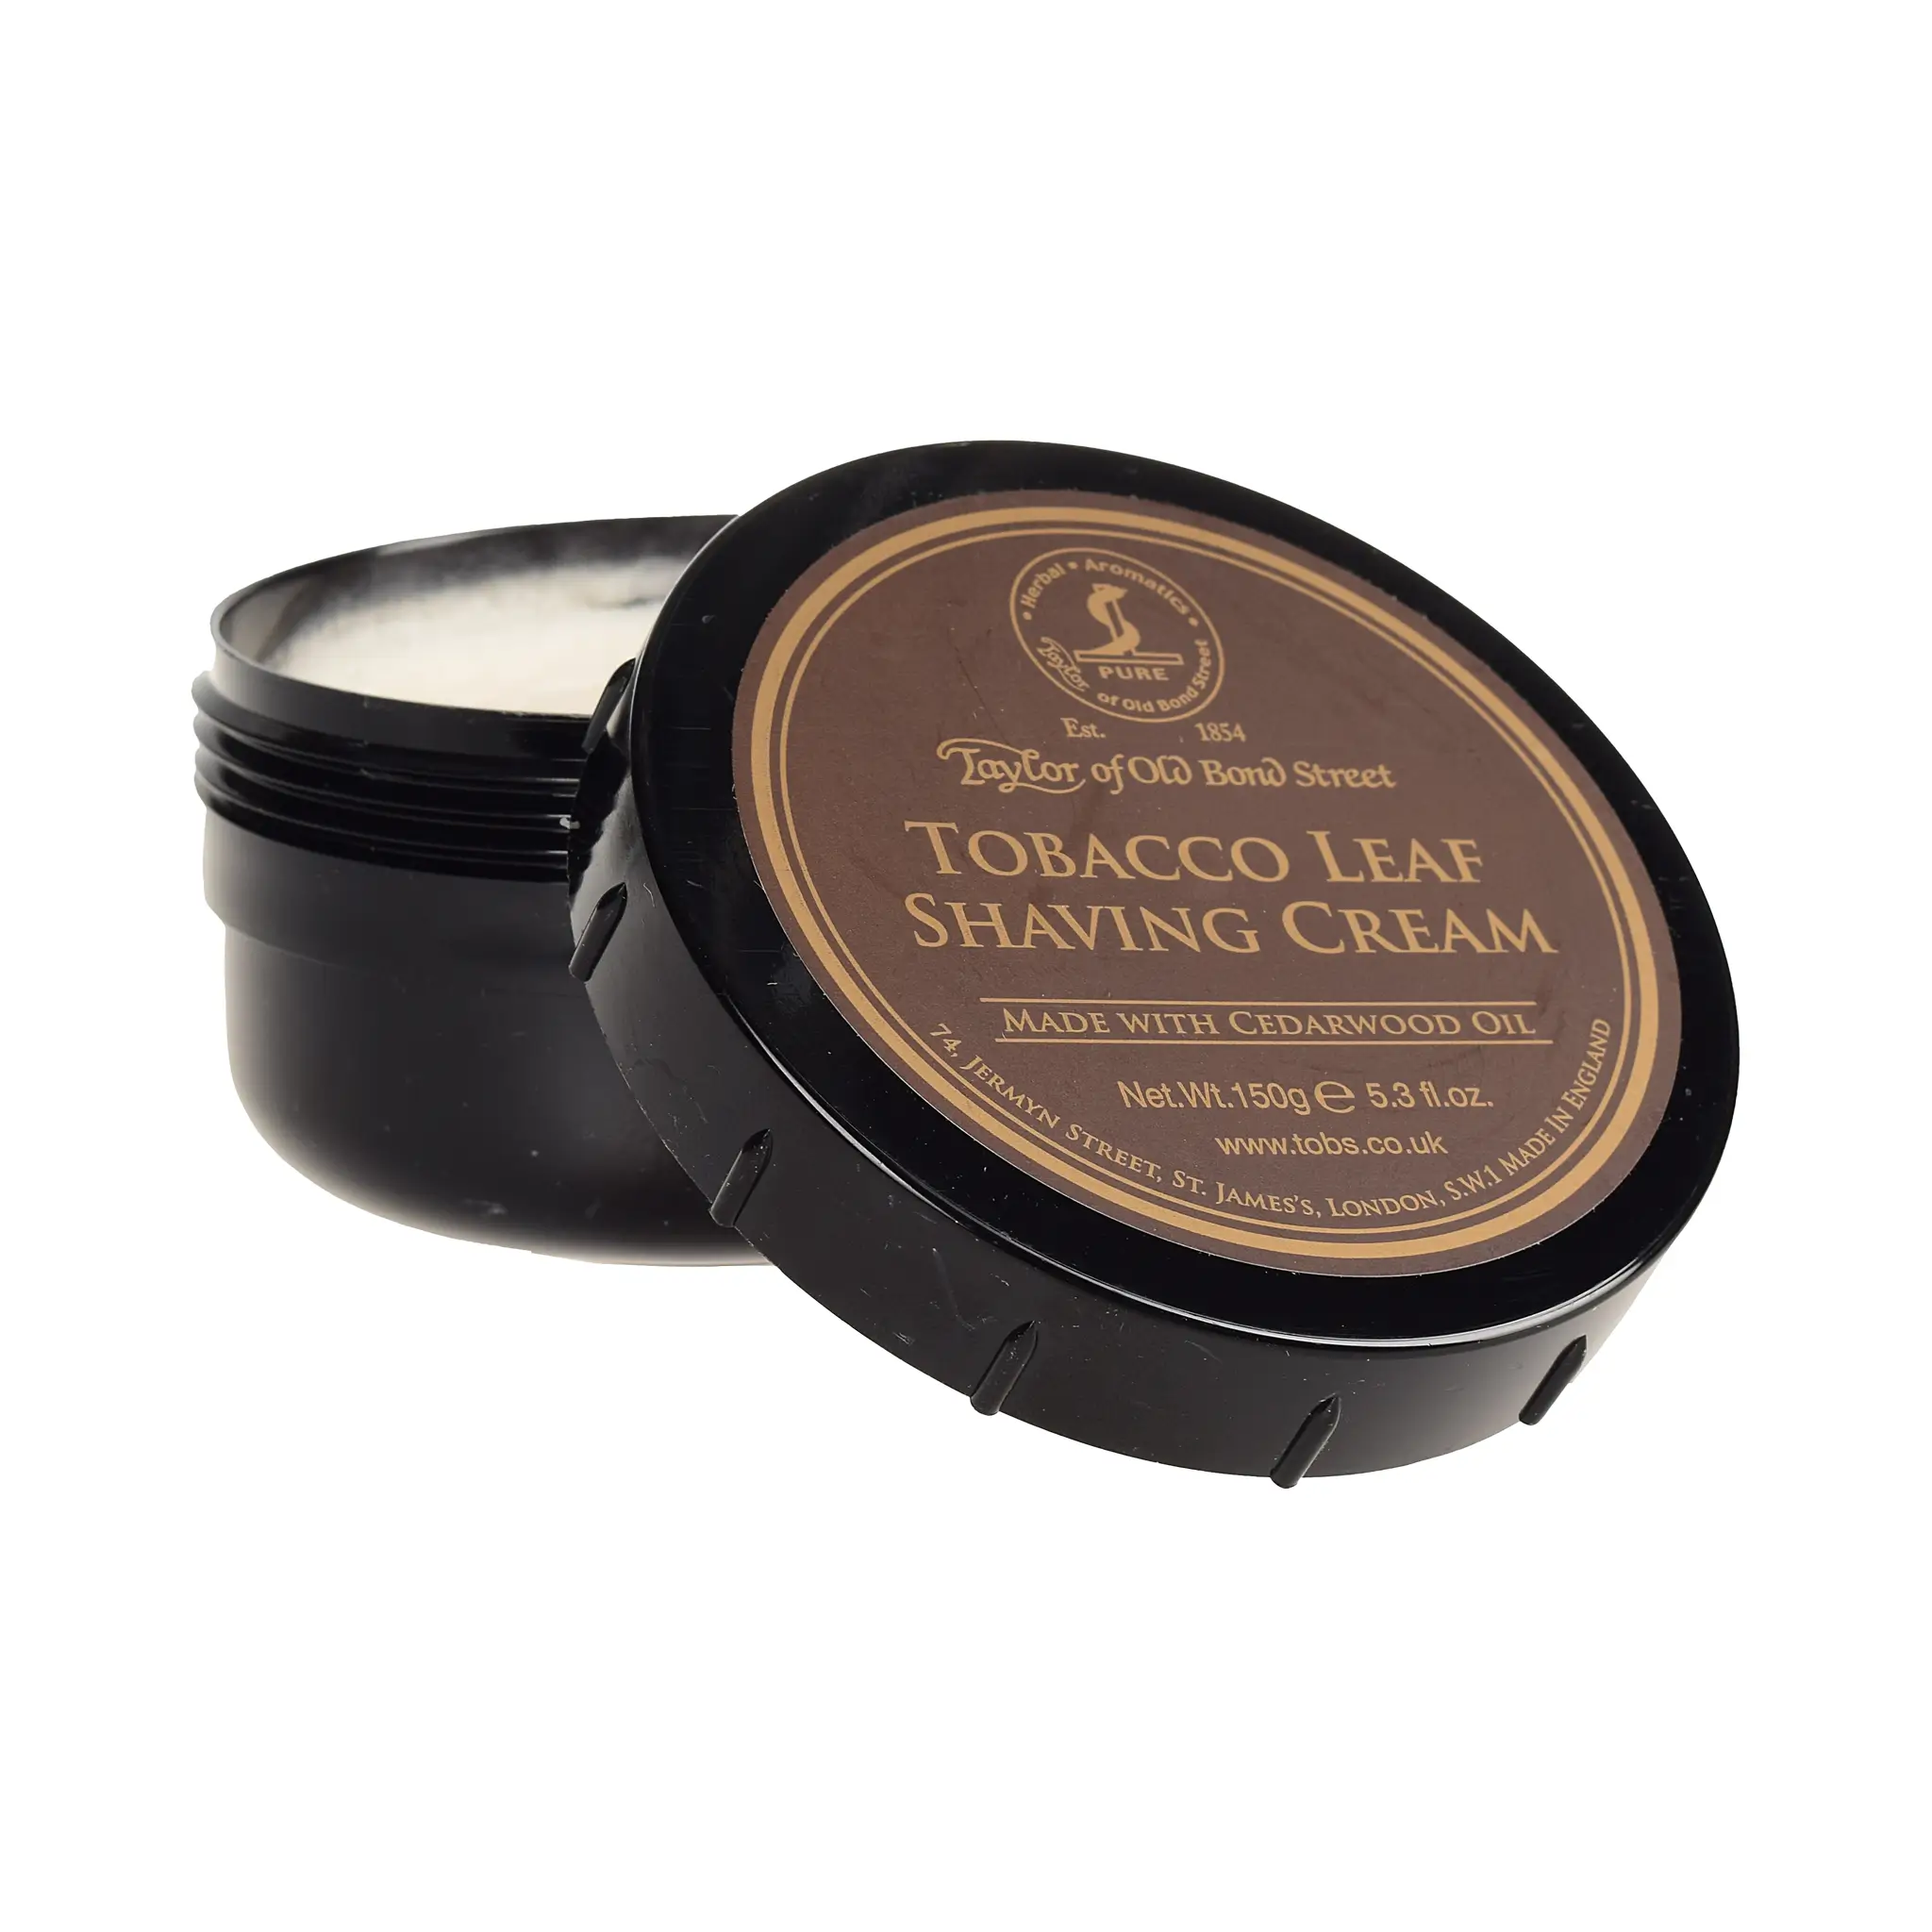 TAYLOR OF Leaf Tabacco OLD g BOND Cream, 150 Shaving – Tonsus STREET